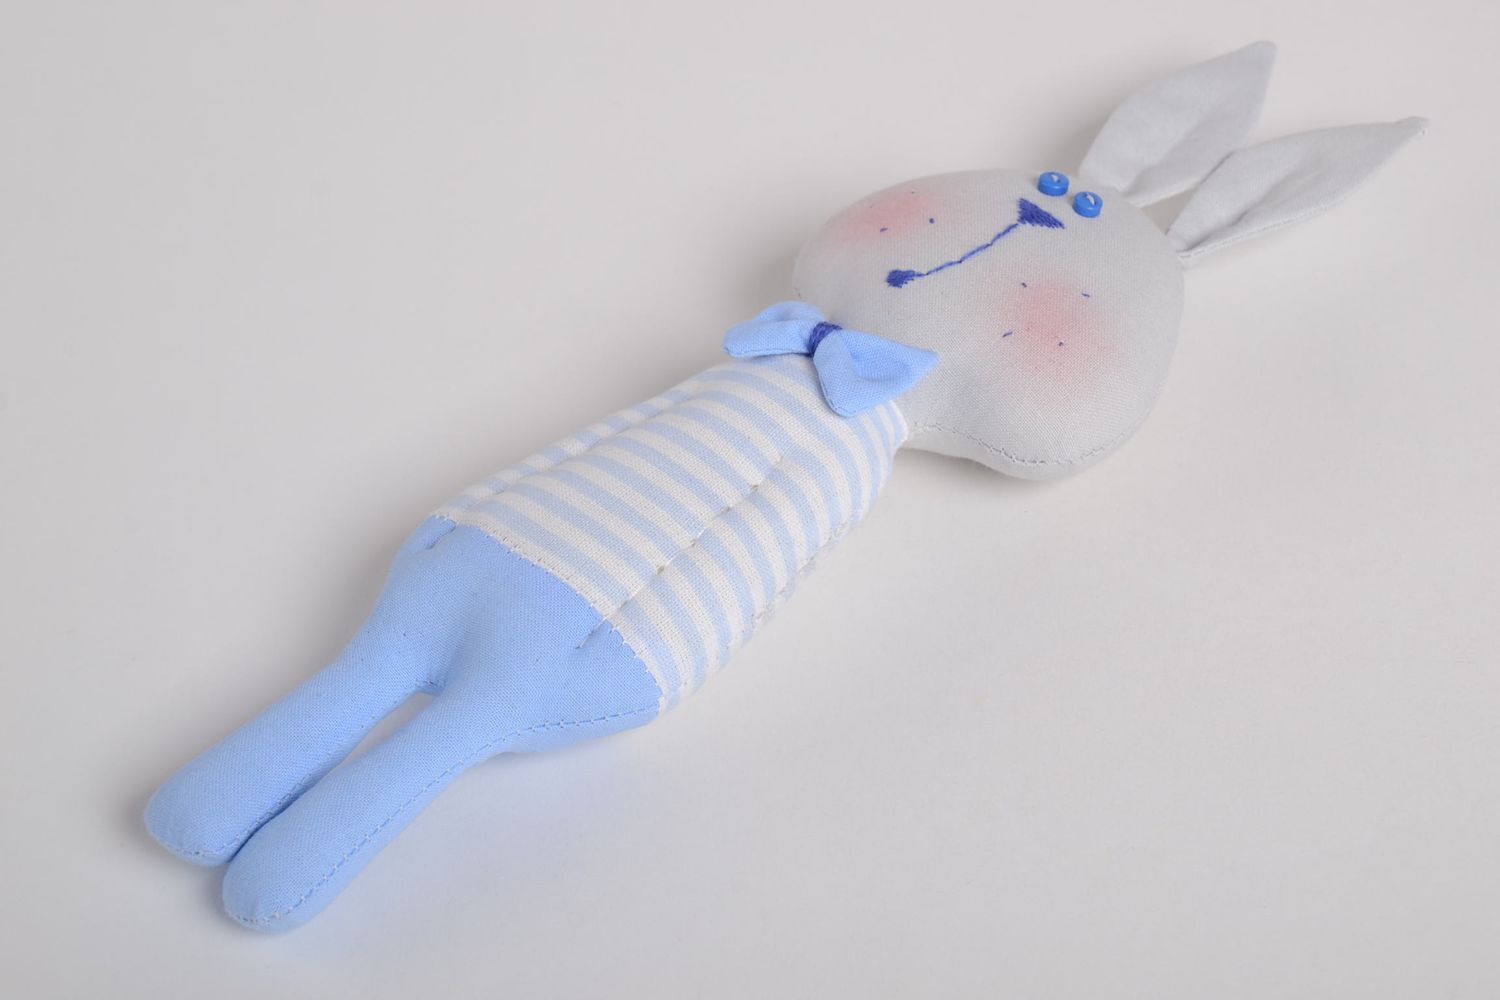 Handmade stylish stuffed toy bunny soft doll for babies interior decor ideas photo 2